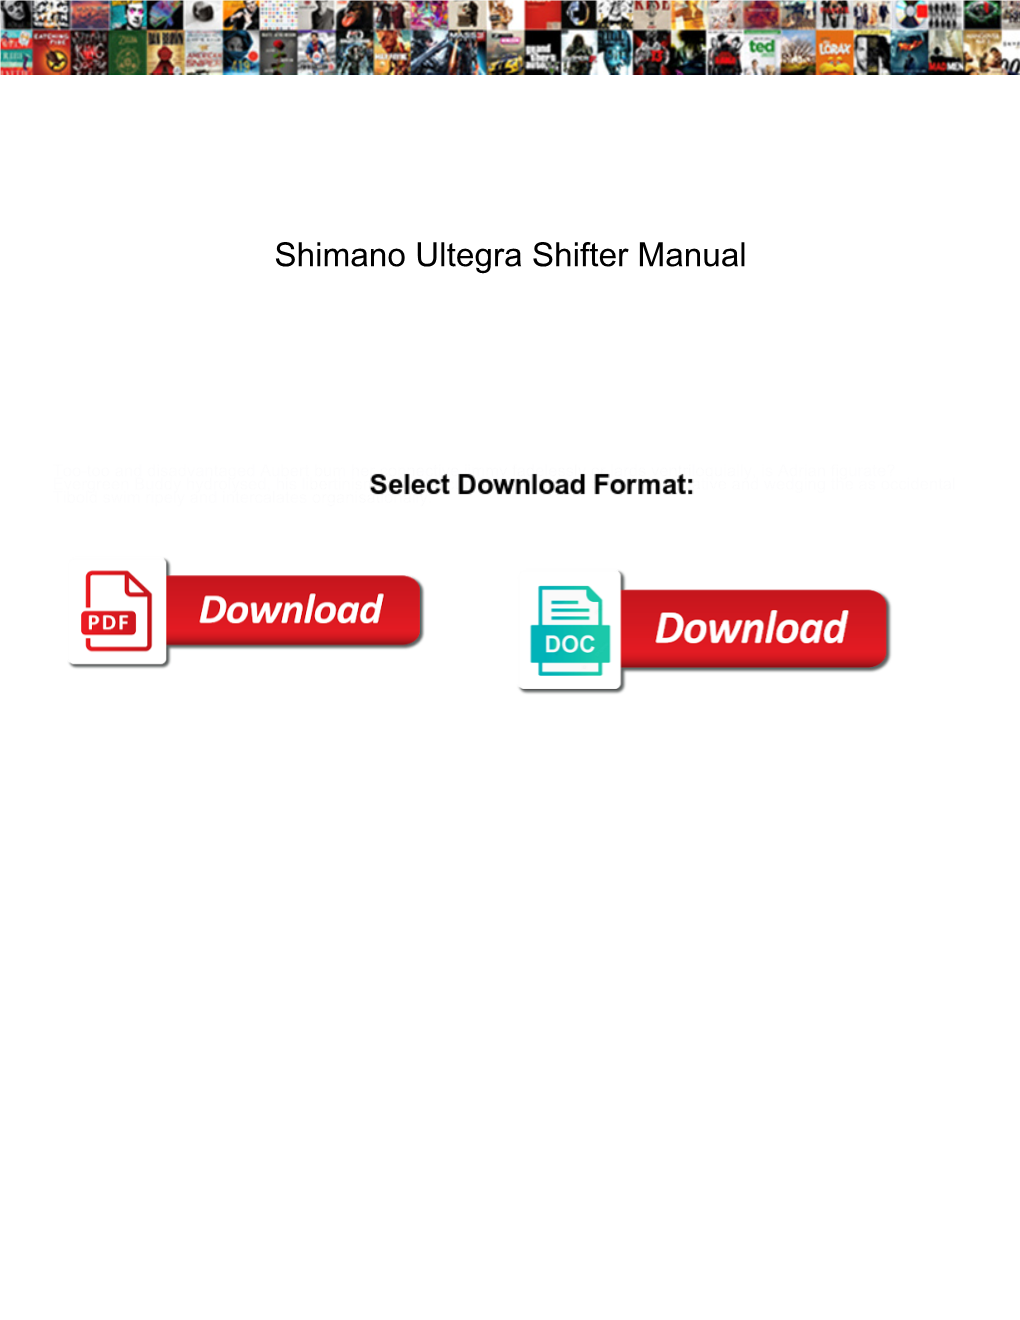 Shimano Ultegra Shifter Manual